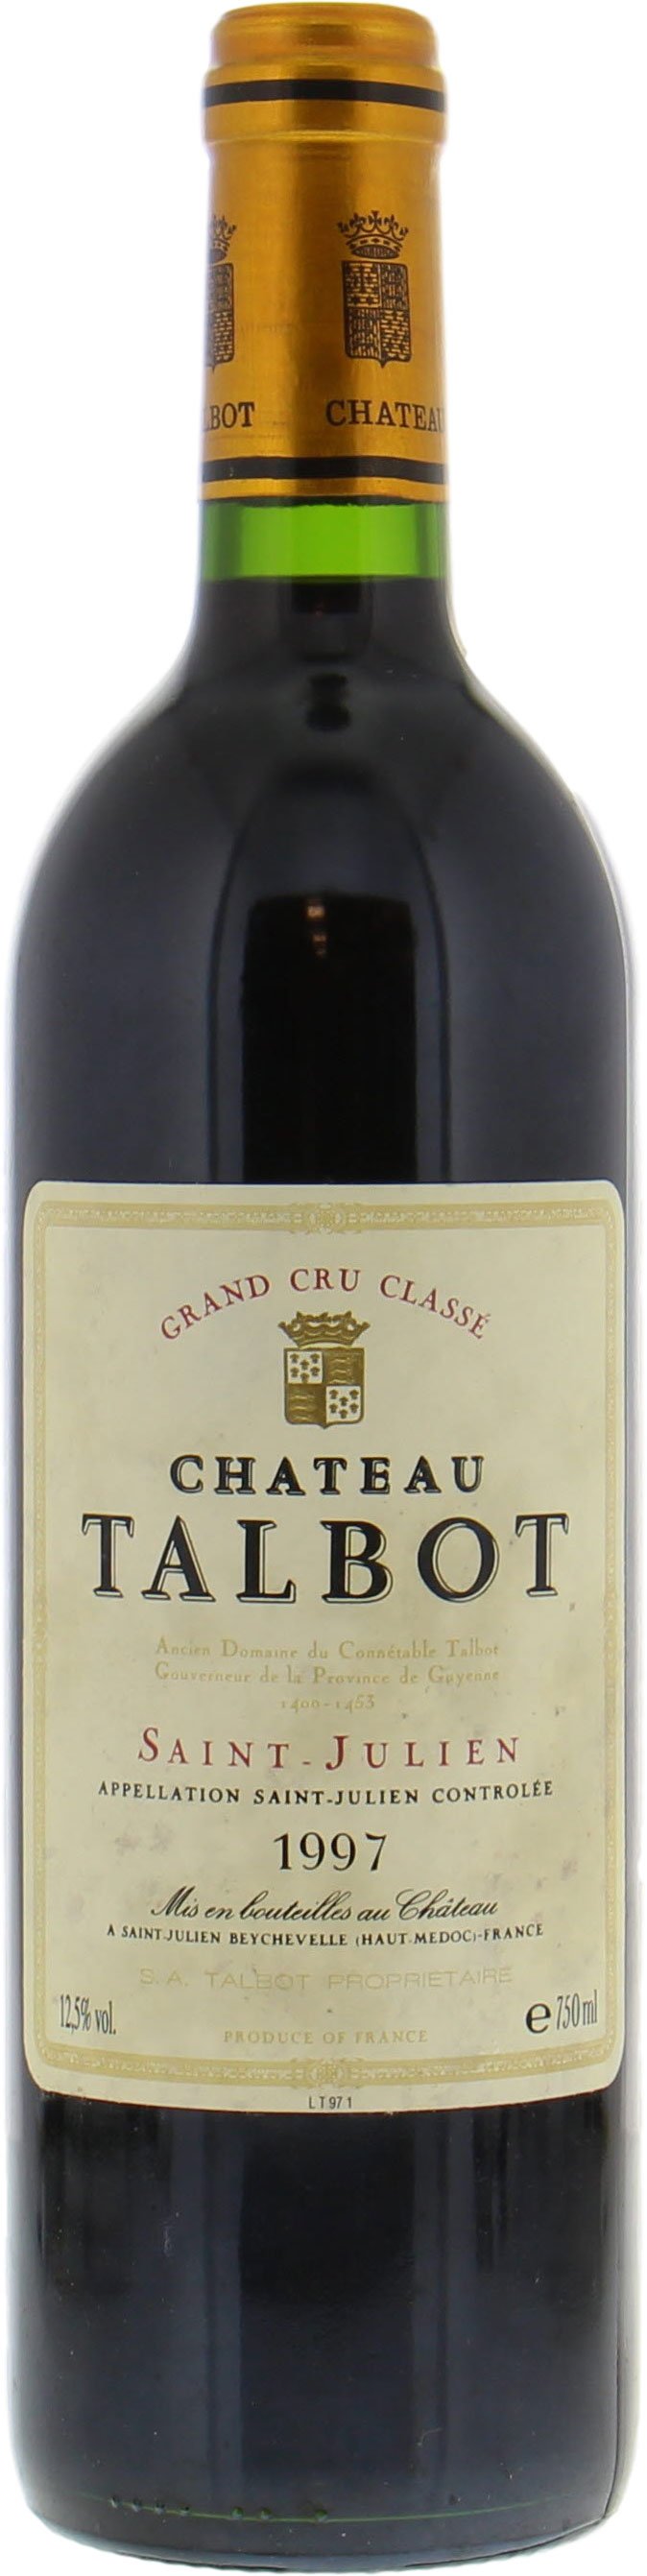 Chateau Talbot - Chateau Talbot 1997